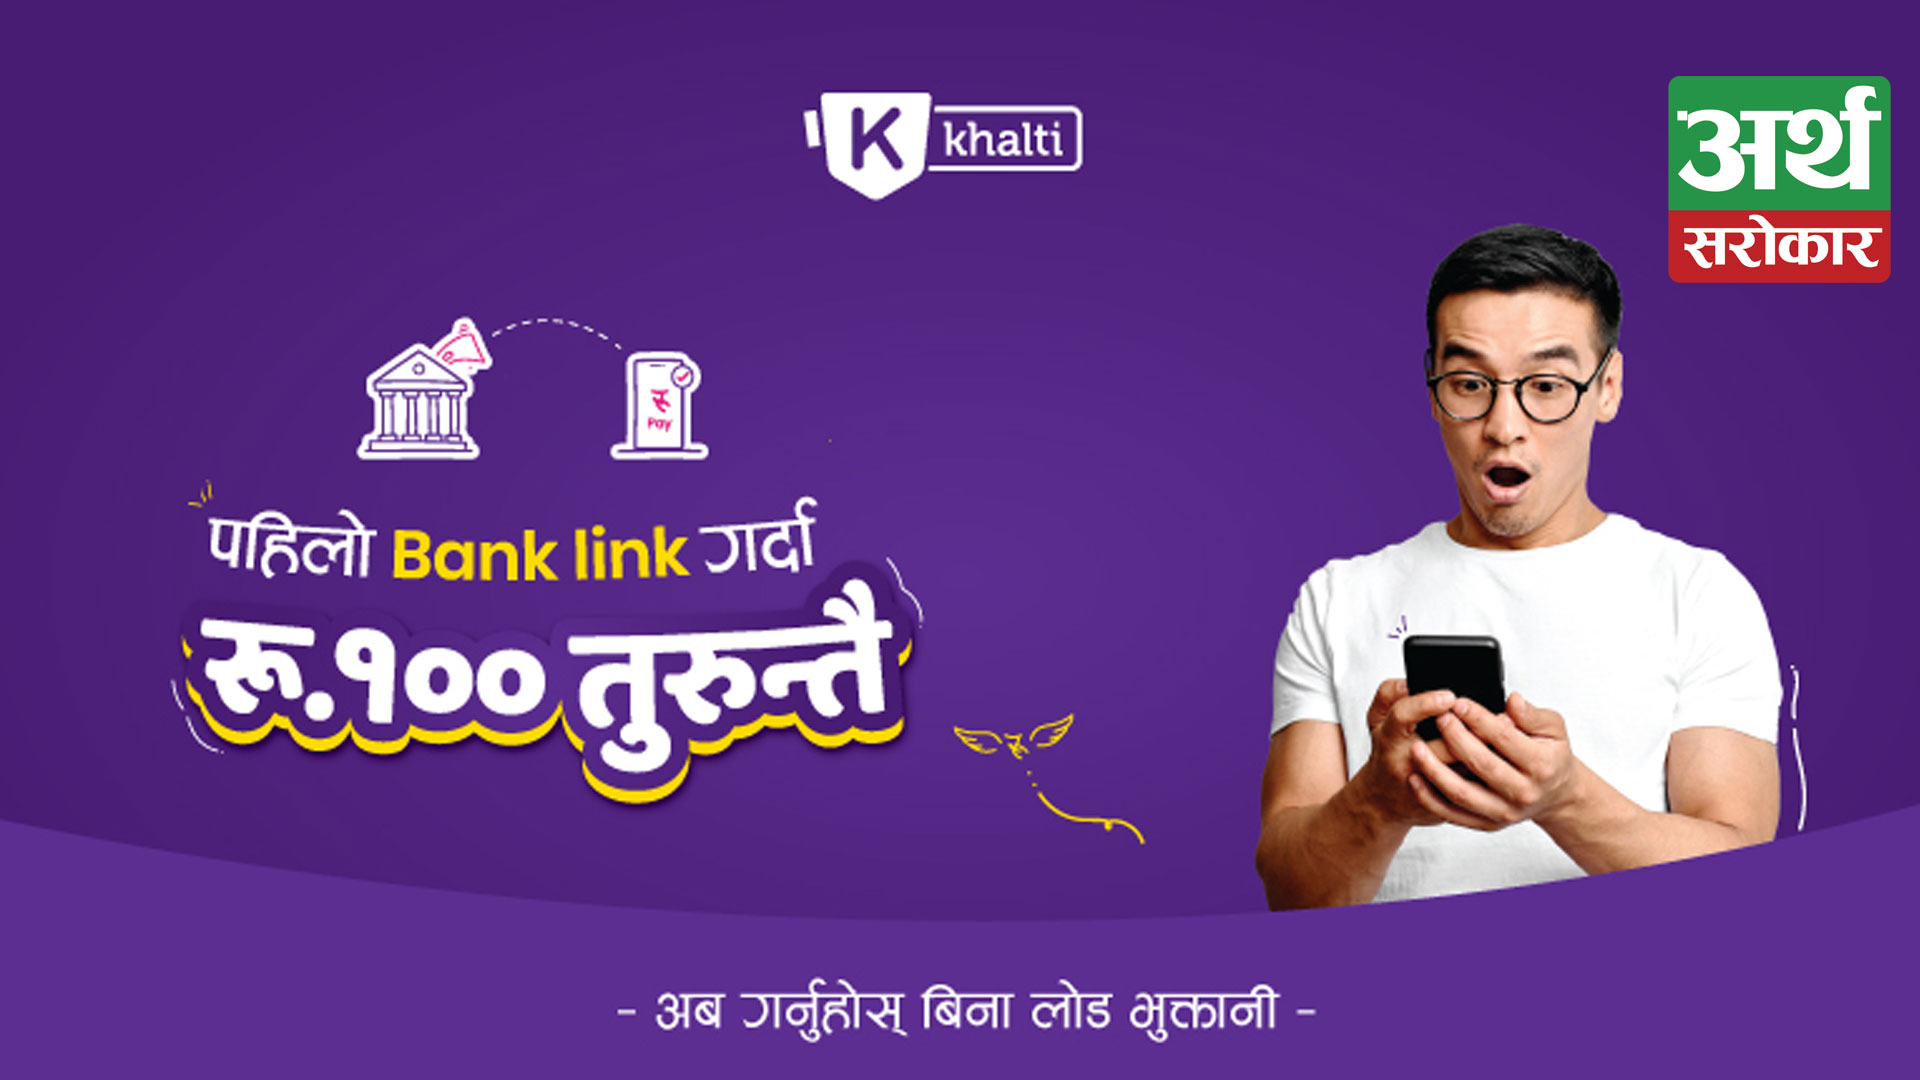 Sureshot Rs. 100 Bonus while linking your Bank account to Khalti Digital Wallet